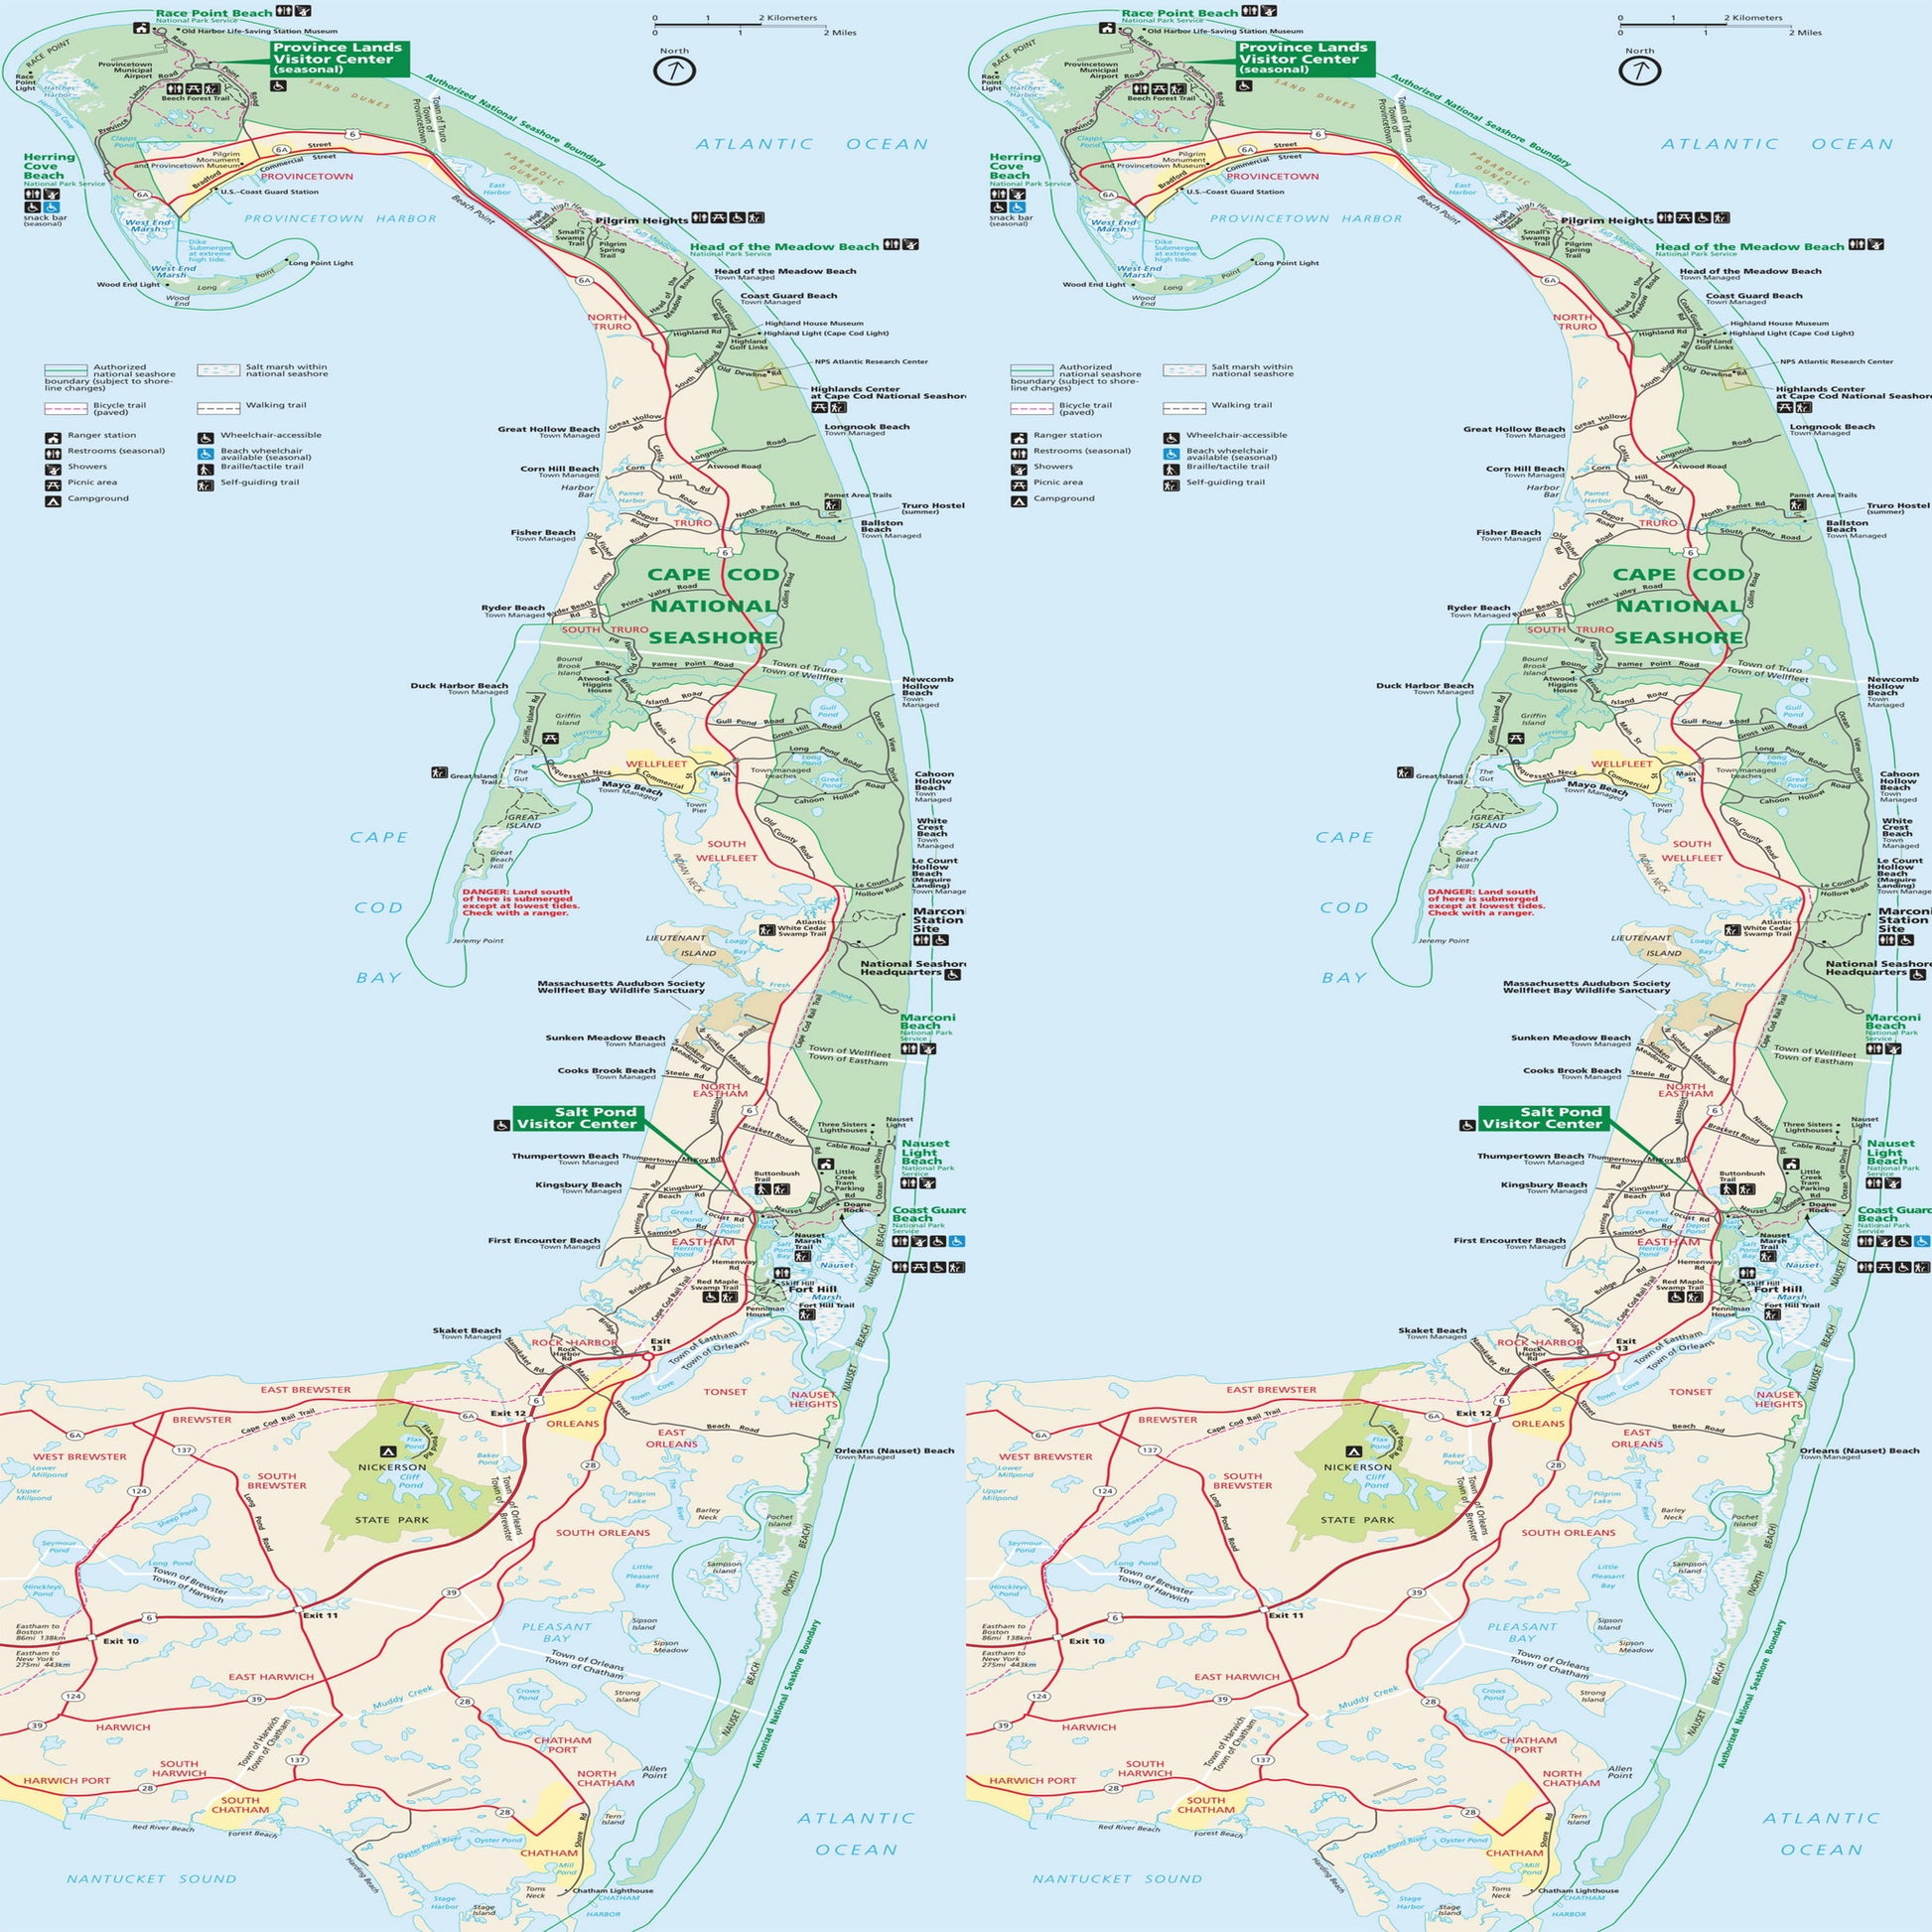 cape cod national seashore map 